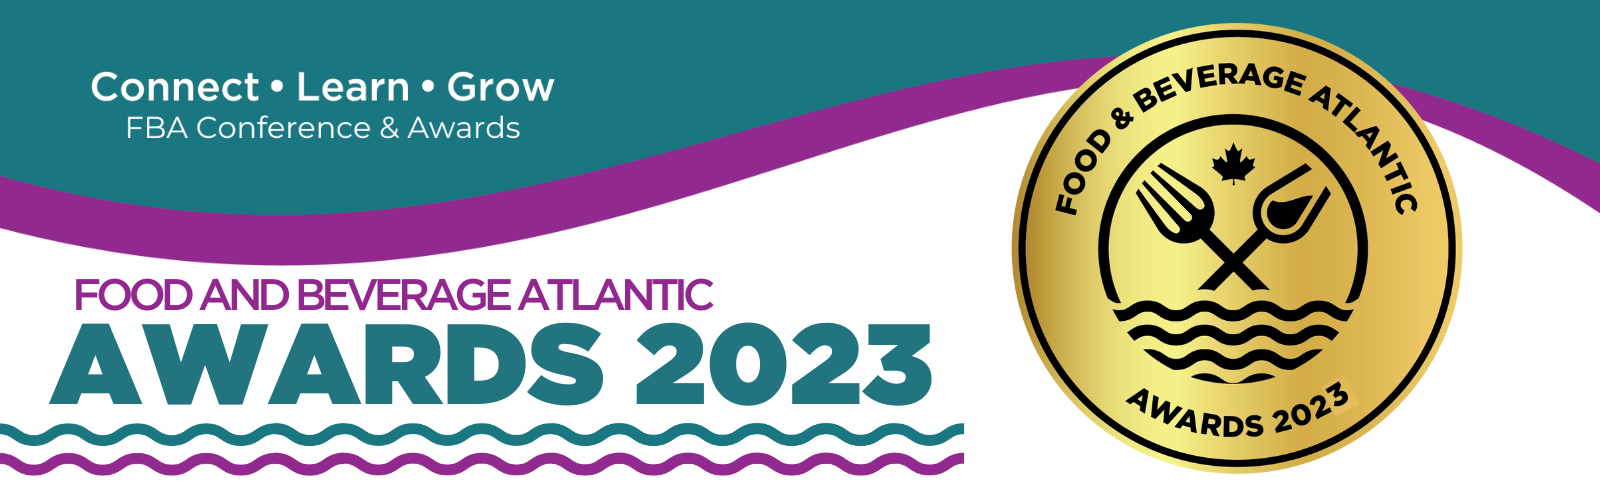 FBA Food & Beverage Atlantic Awards 2023 banner